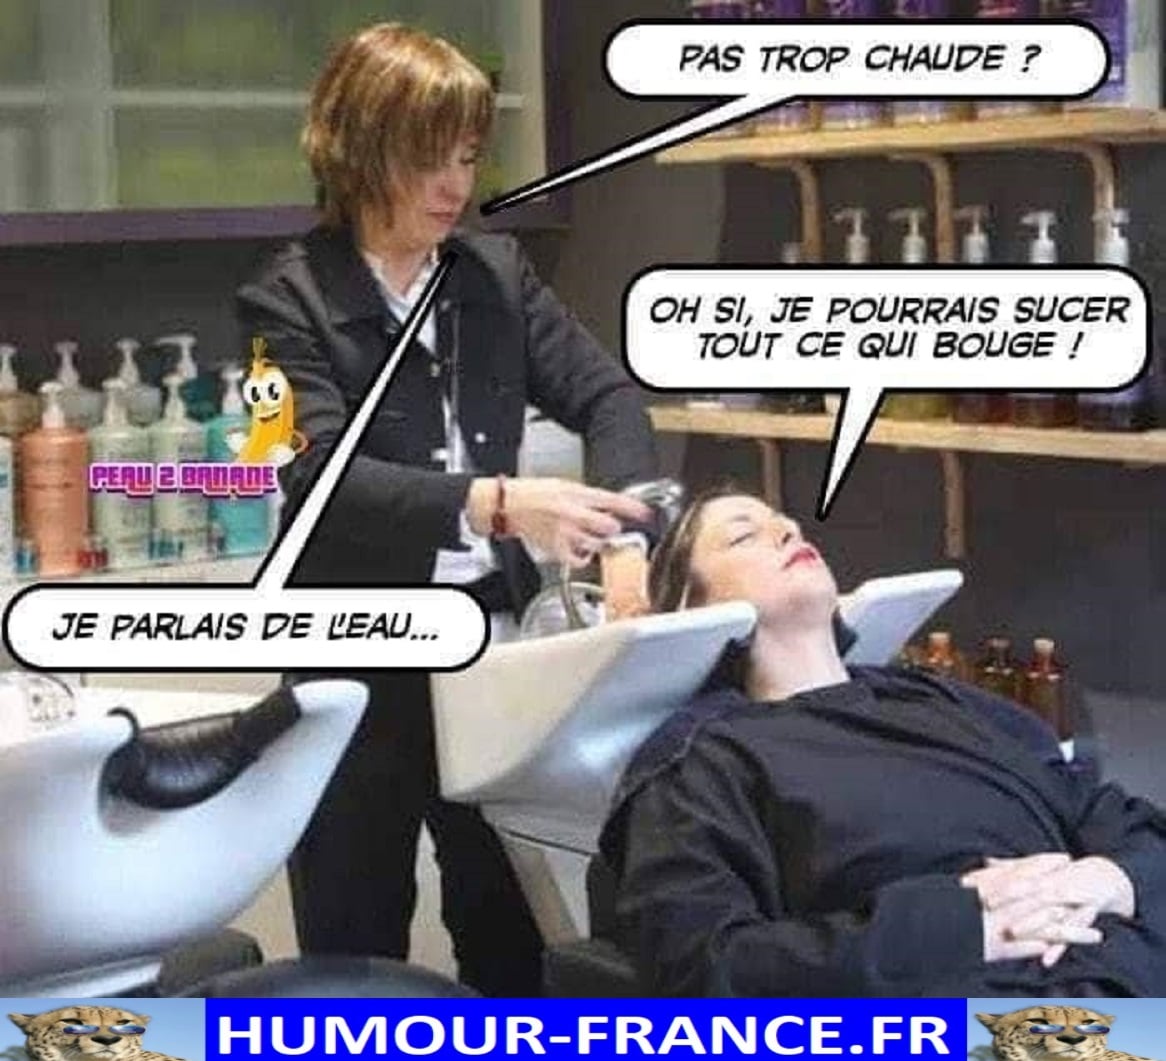 Pas Trop Chaude Humour Francefr 